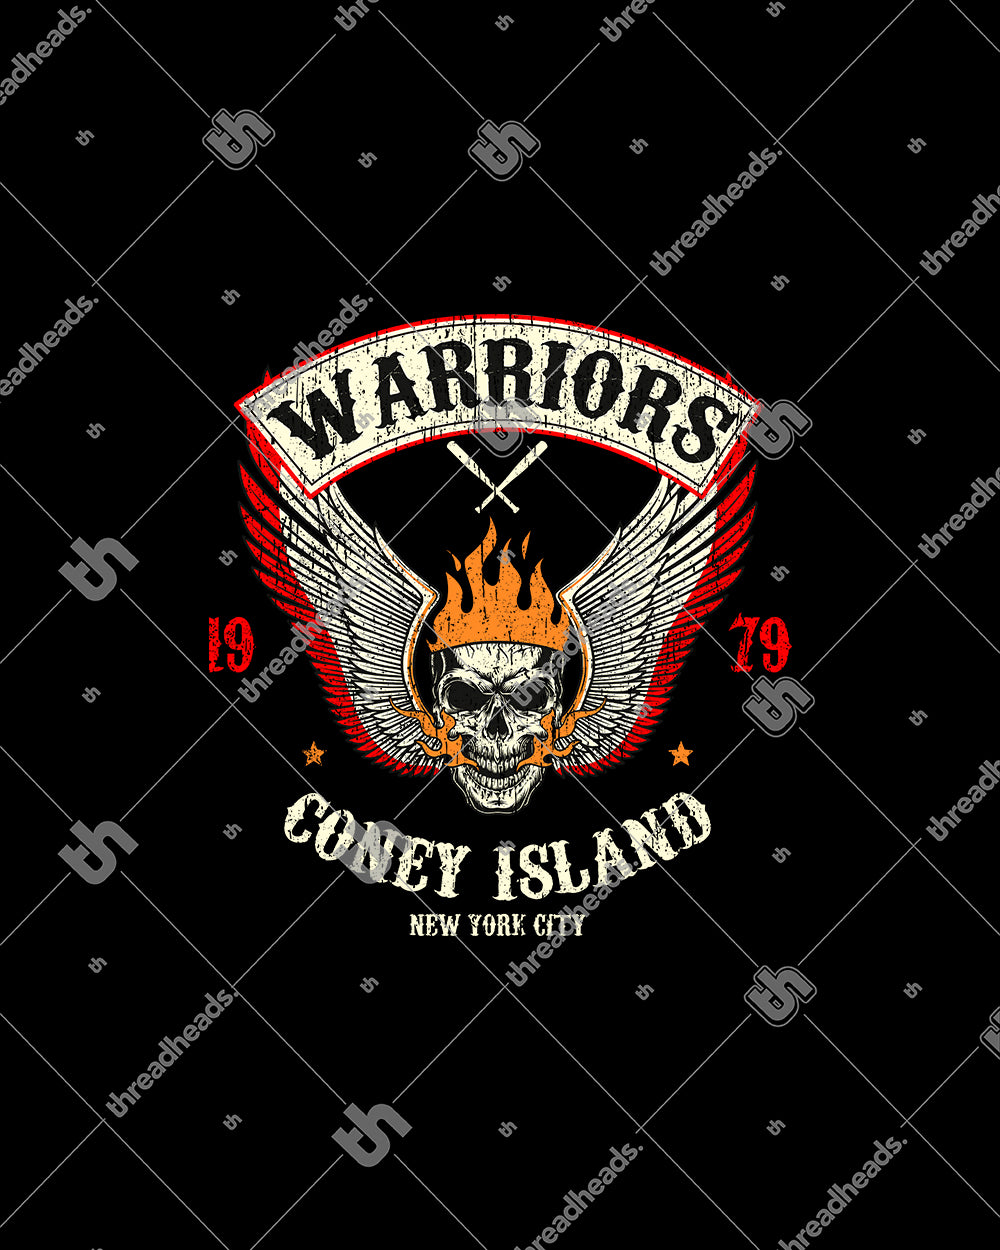 The Warriors Hoodie Australia Online #colour_black